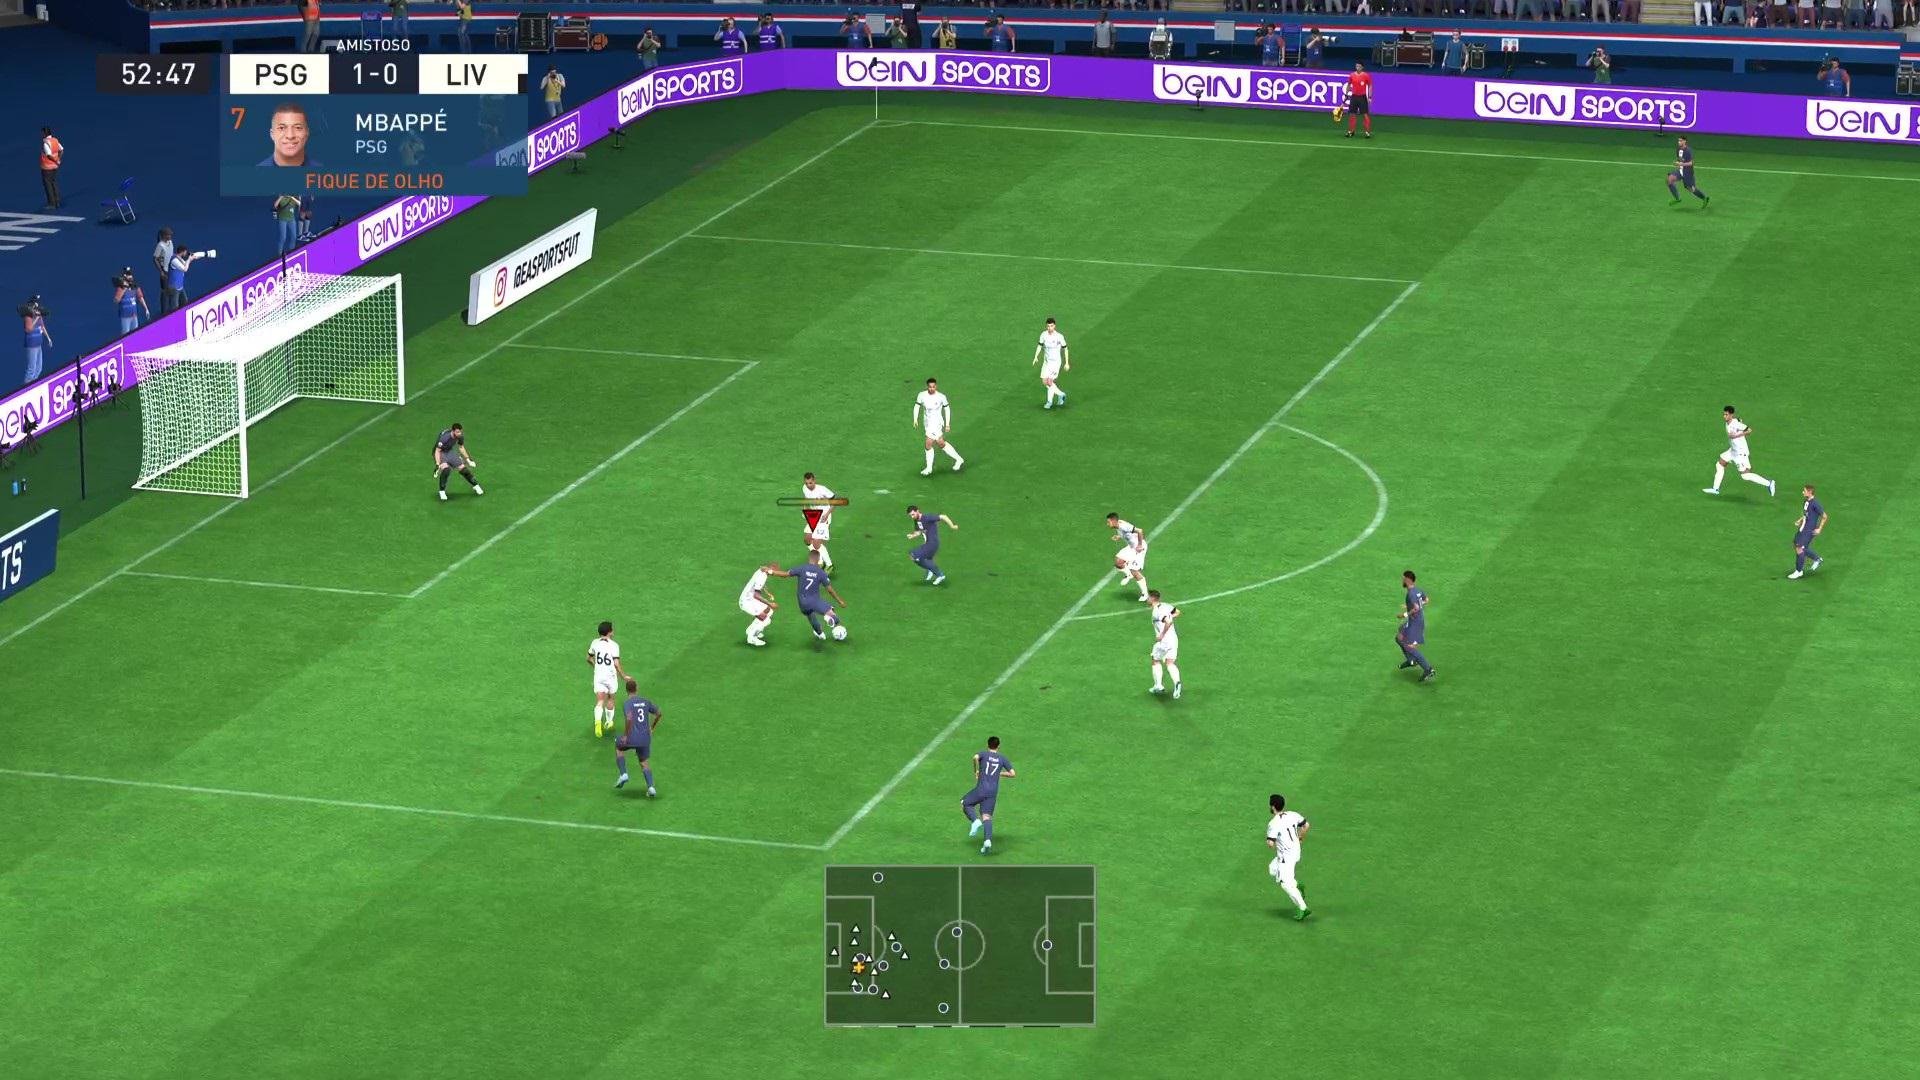 Análise de FIFA 23